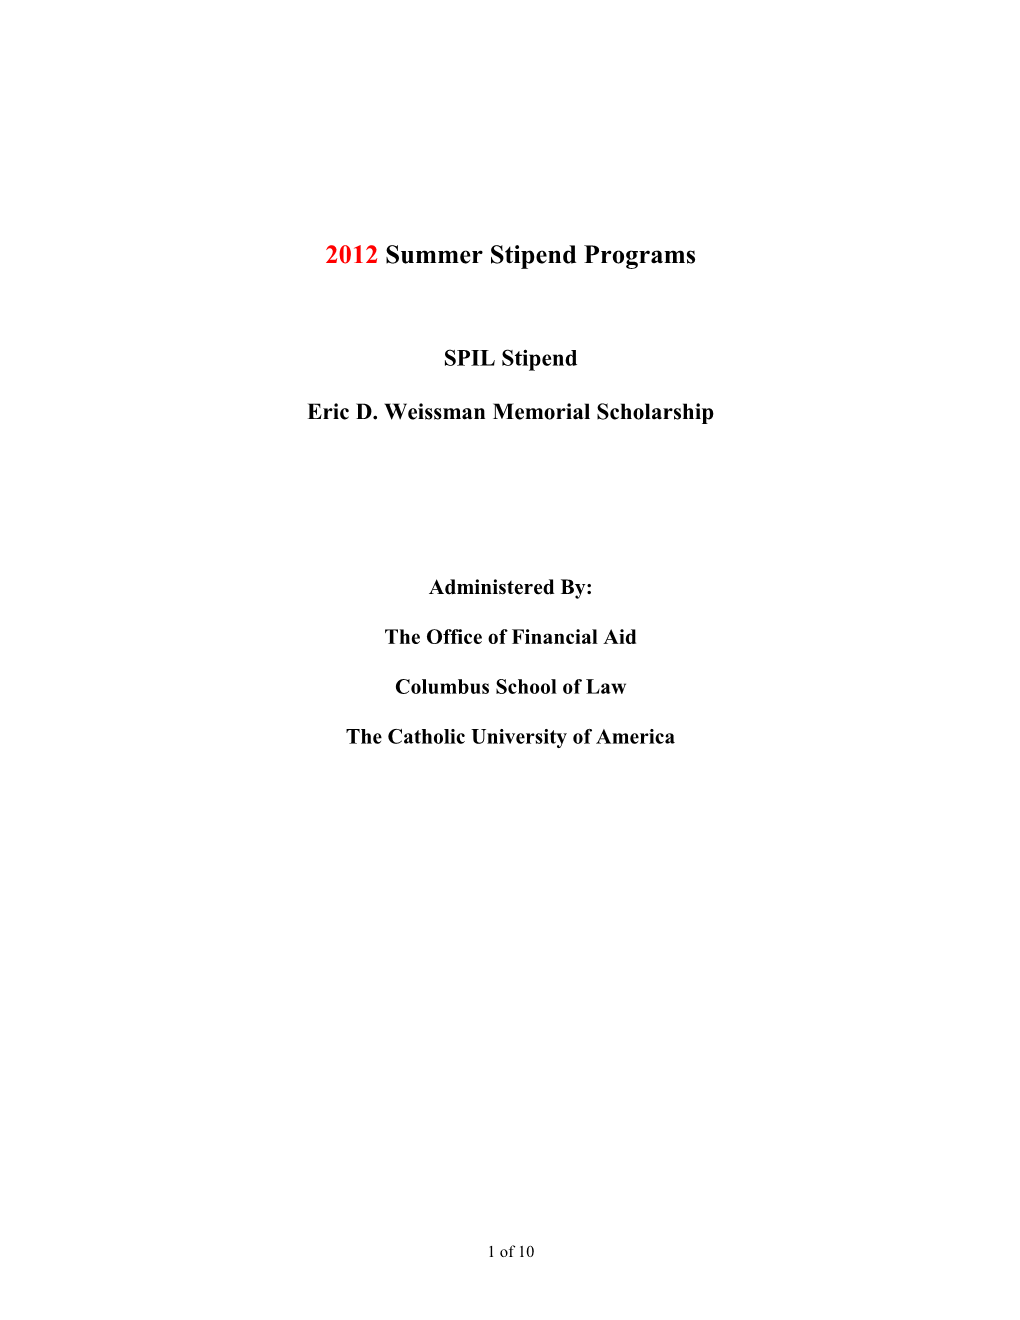 2001 Summer Stipend Programs